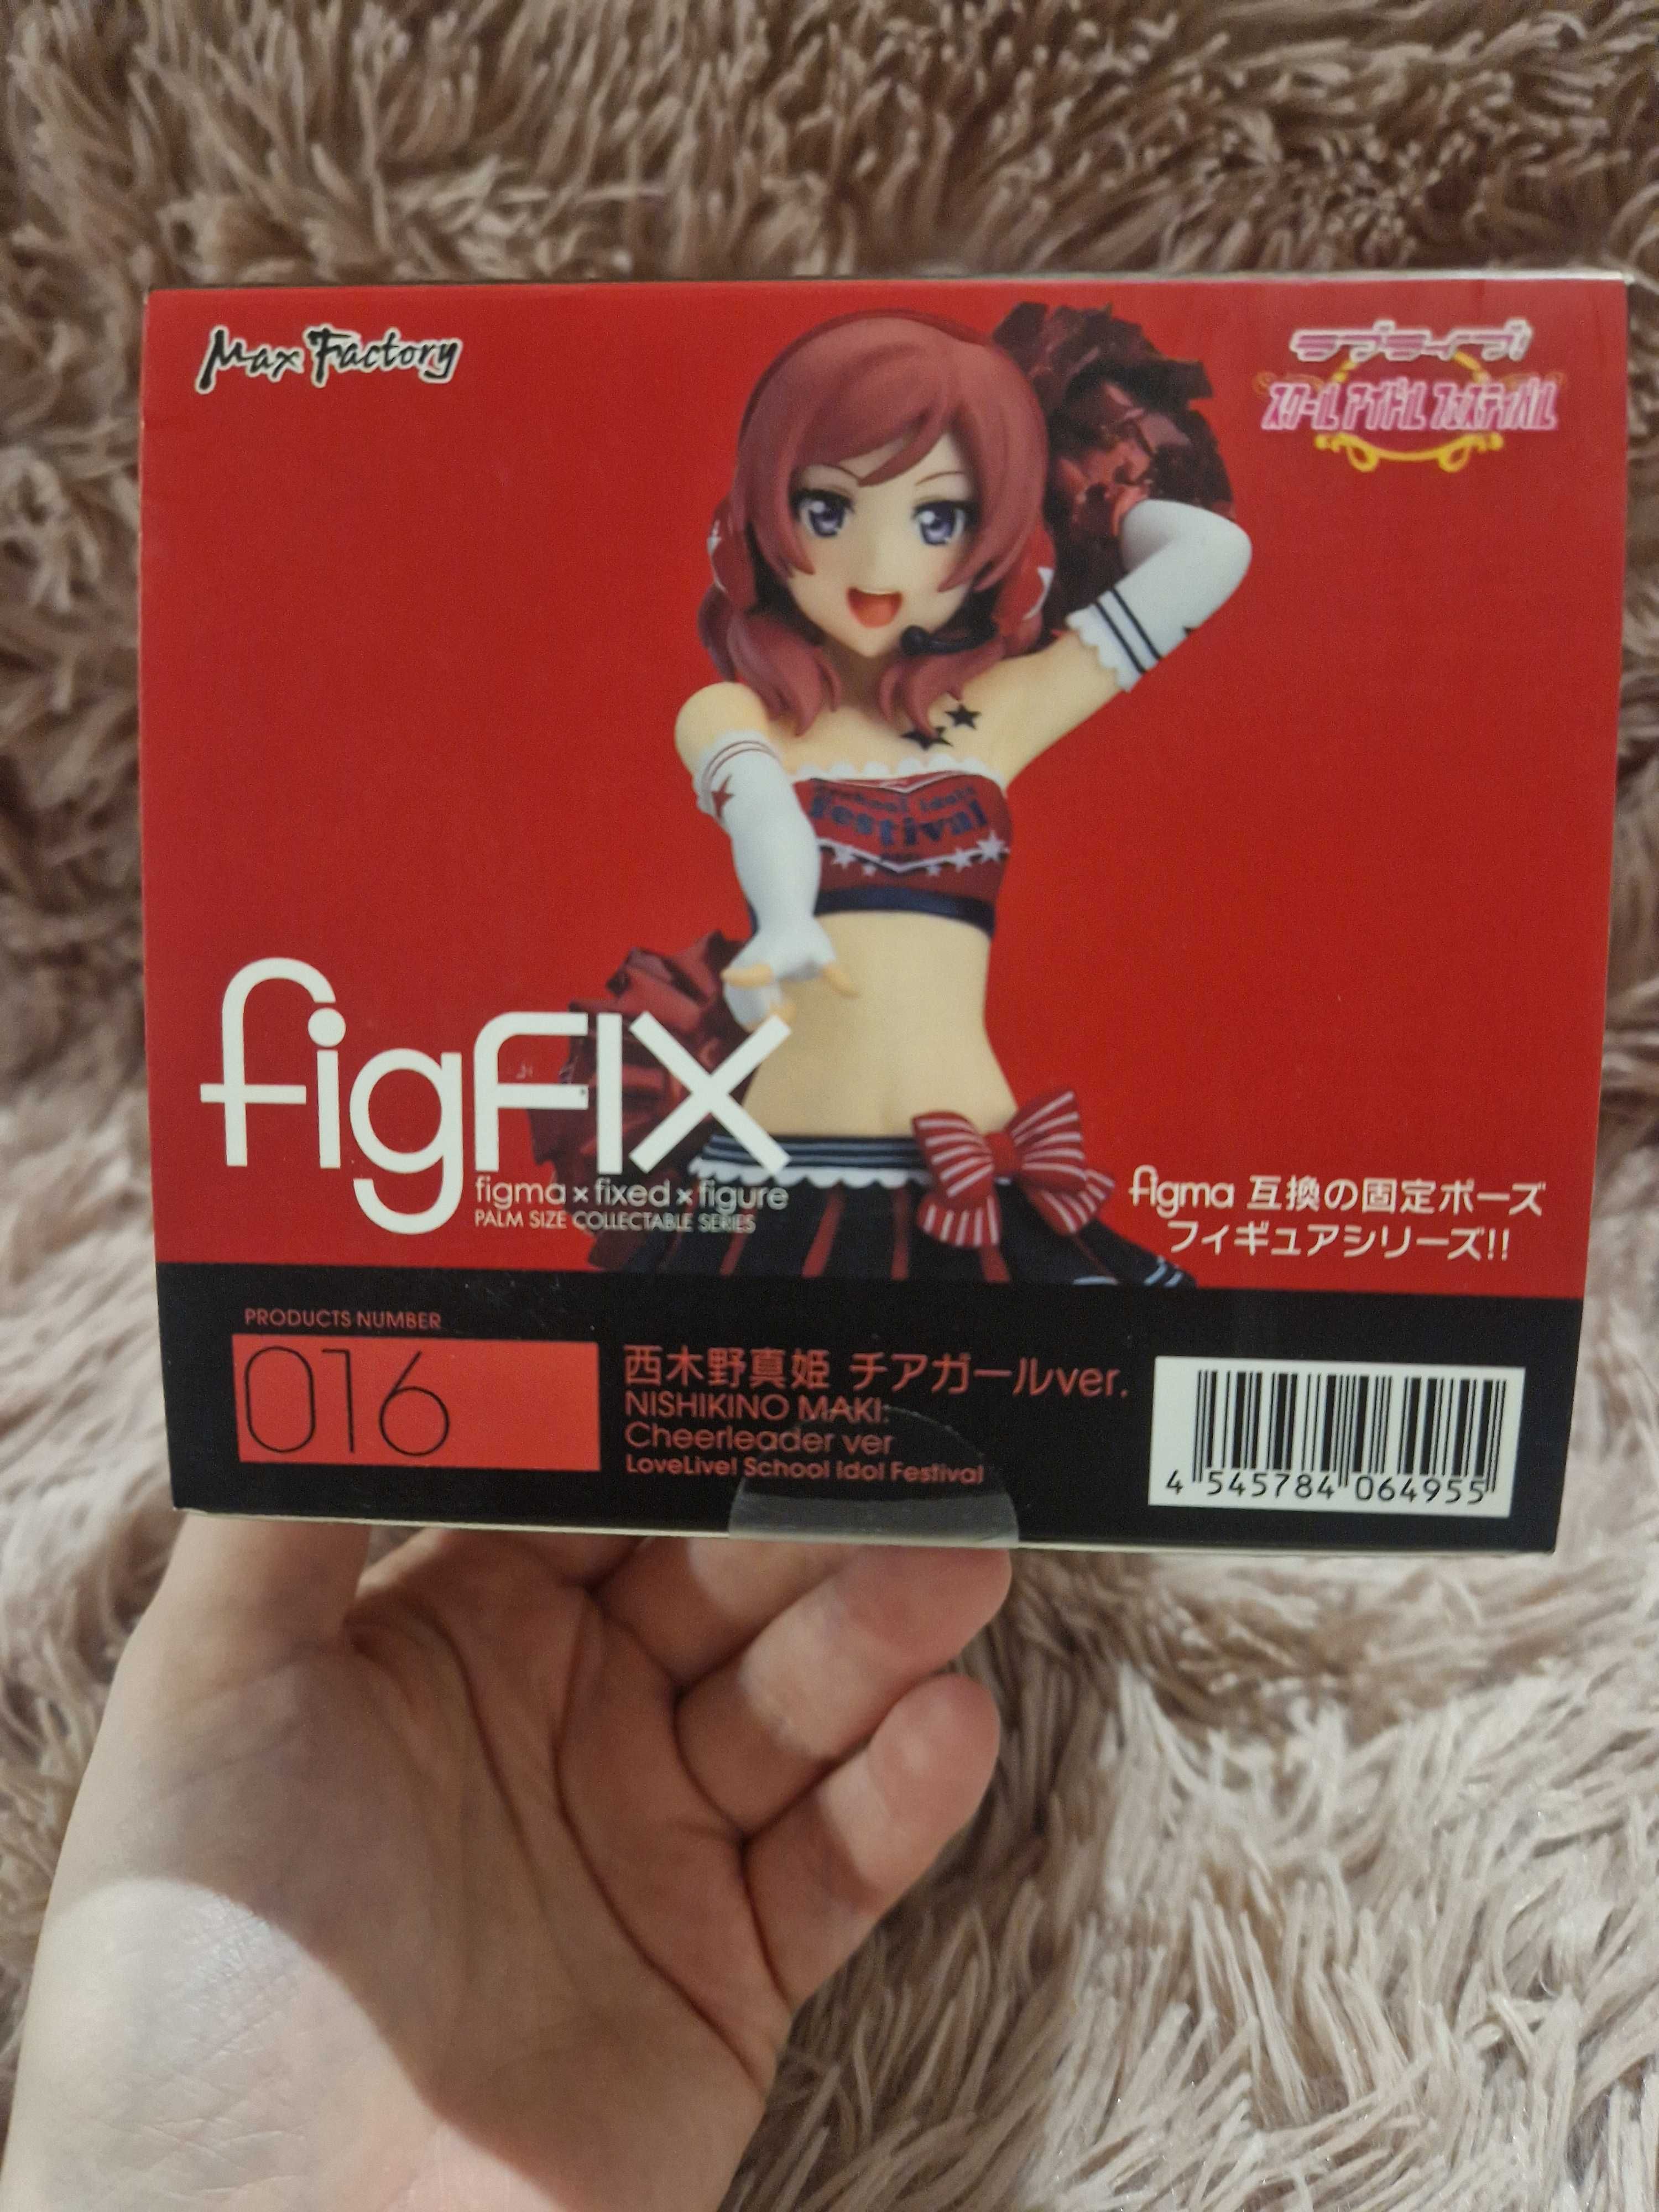 Maki love live figFix